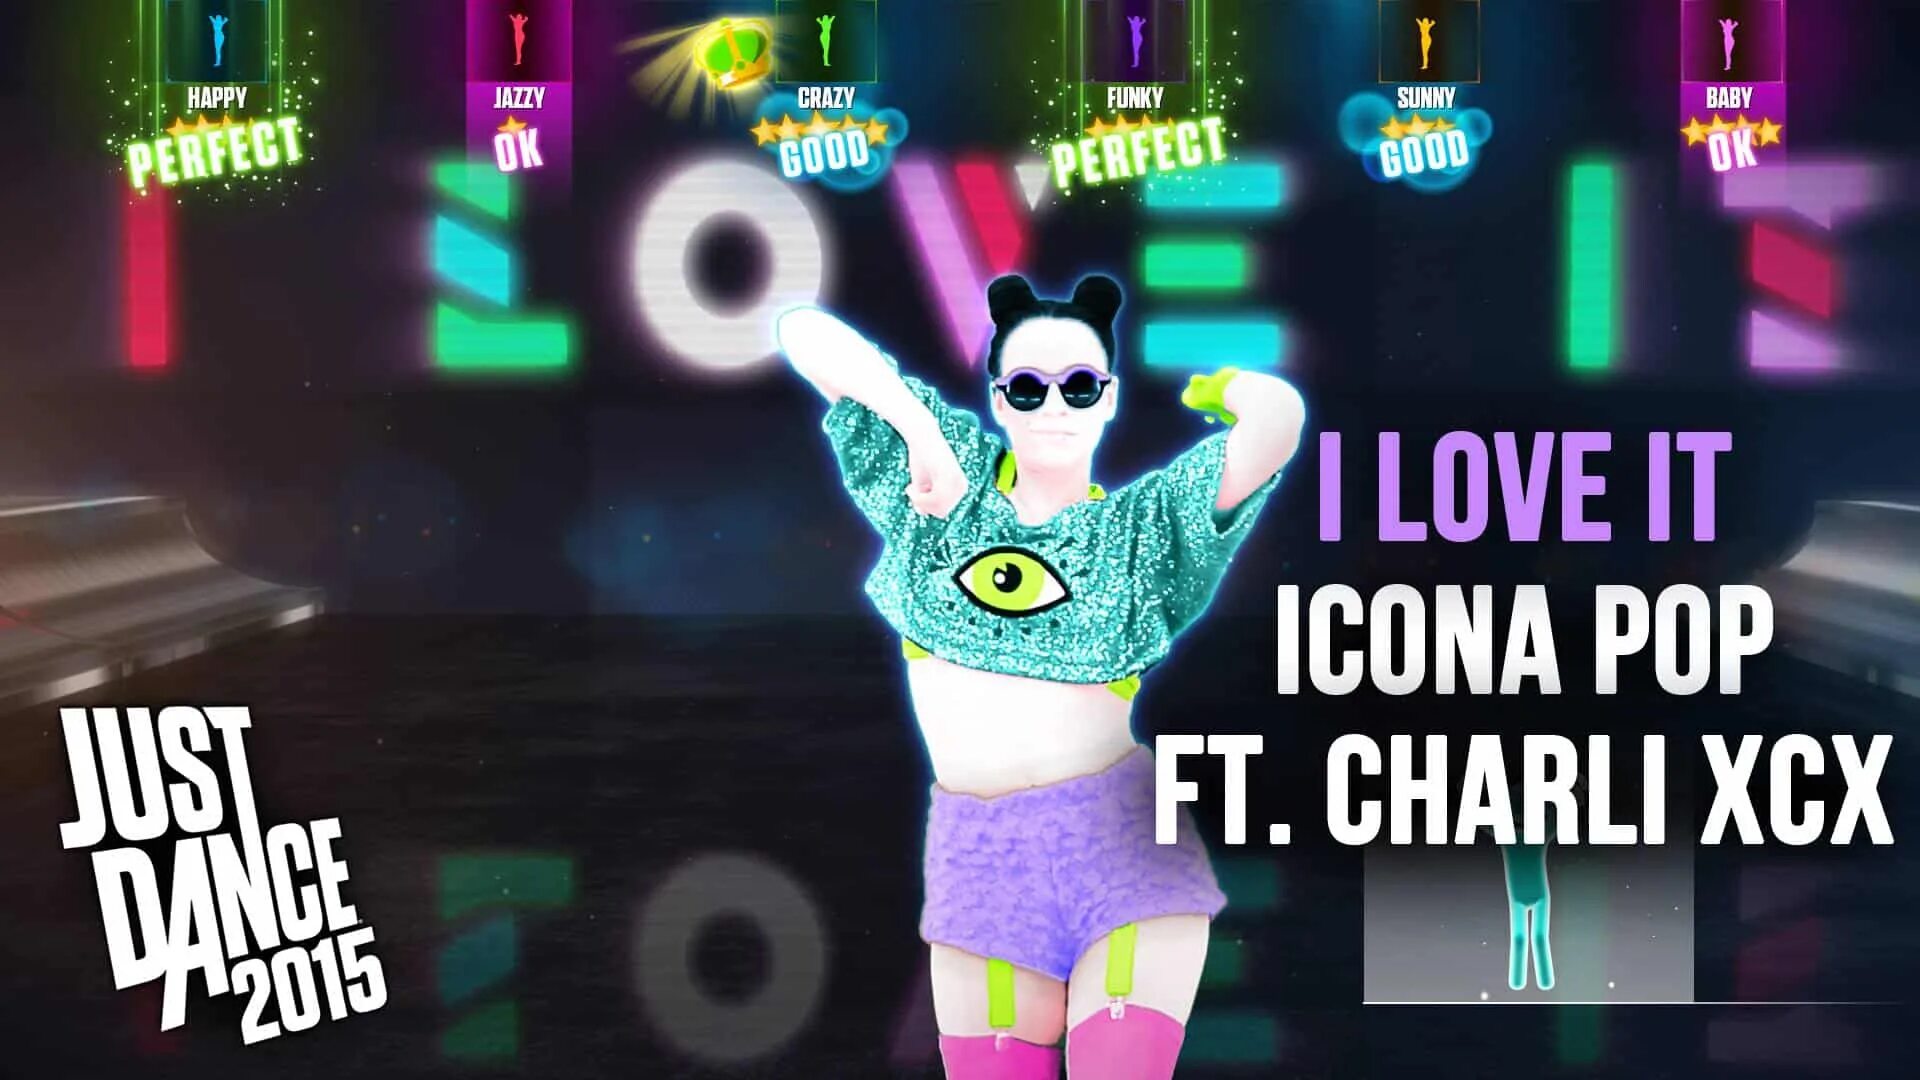 Icona pop charli xcx i love it. Just Dance 2016 Xbox 360 скрин. Just Dance 2015 Controller. Just Dance i Love it. Just Dance 5.